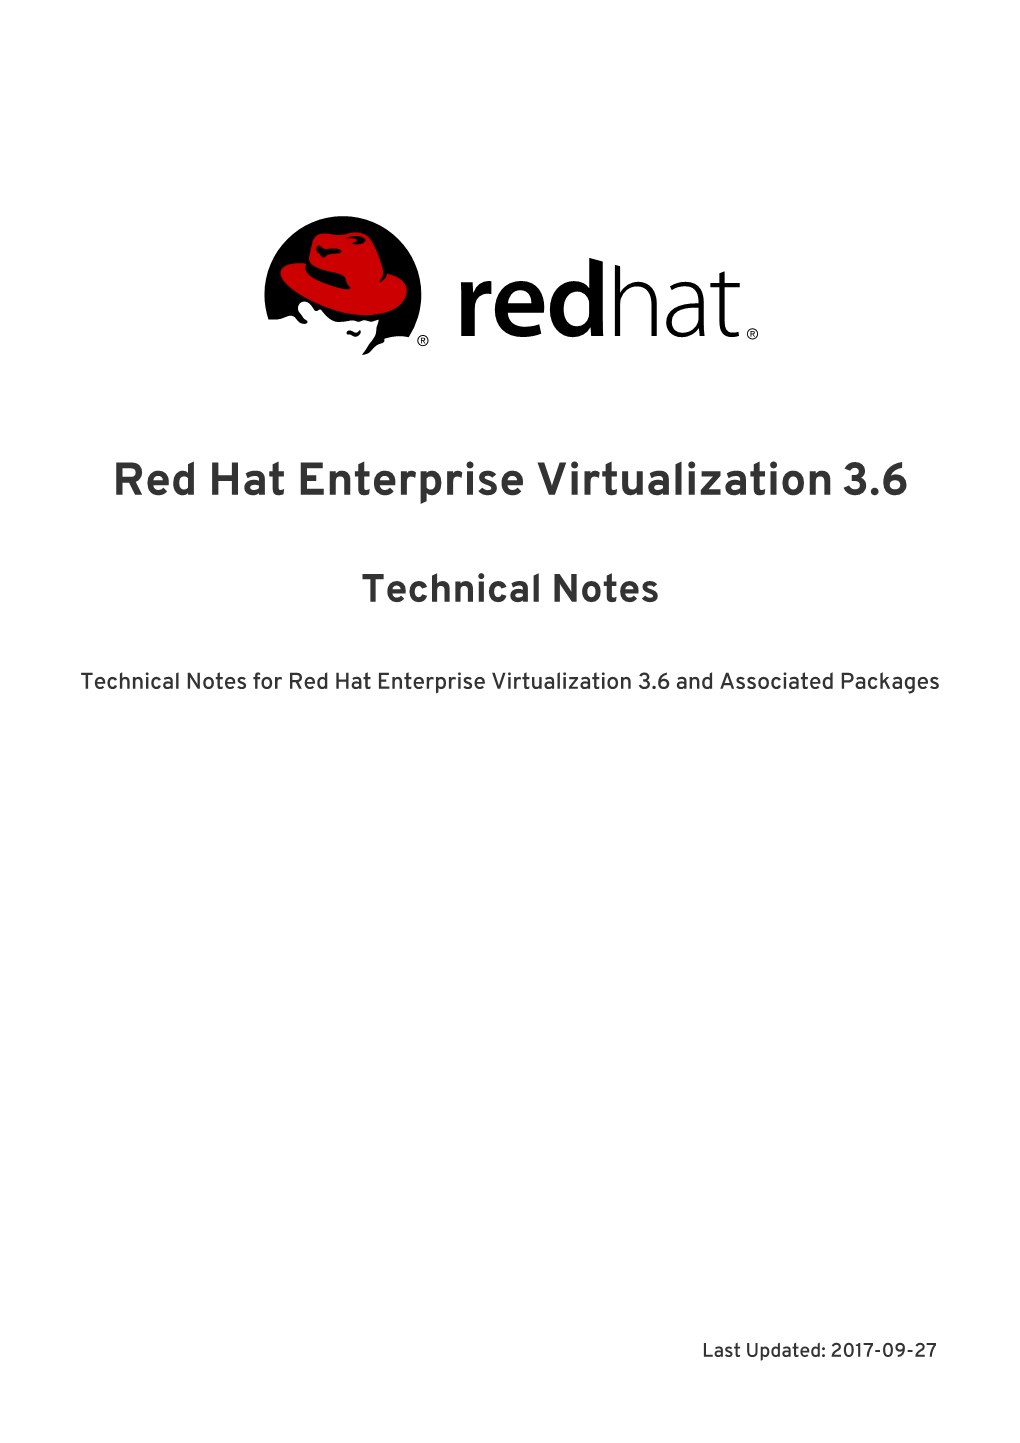 Red Hat Enterprise Virtualization 3.6 Technical Notes